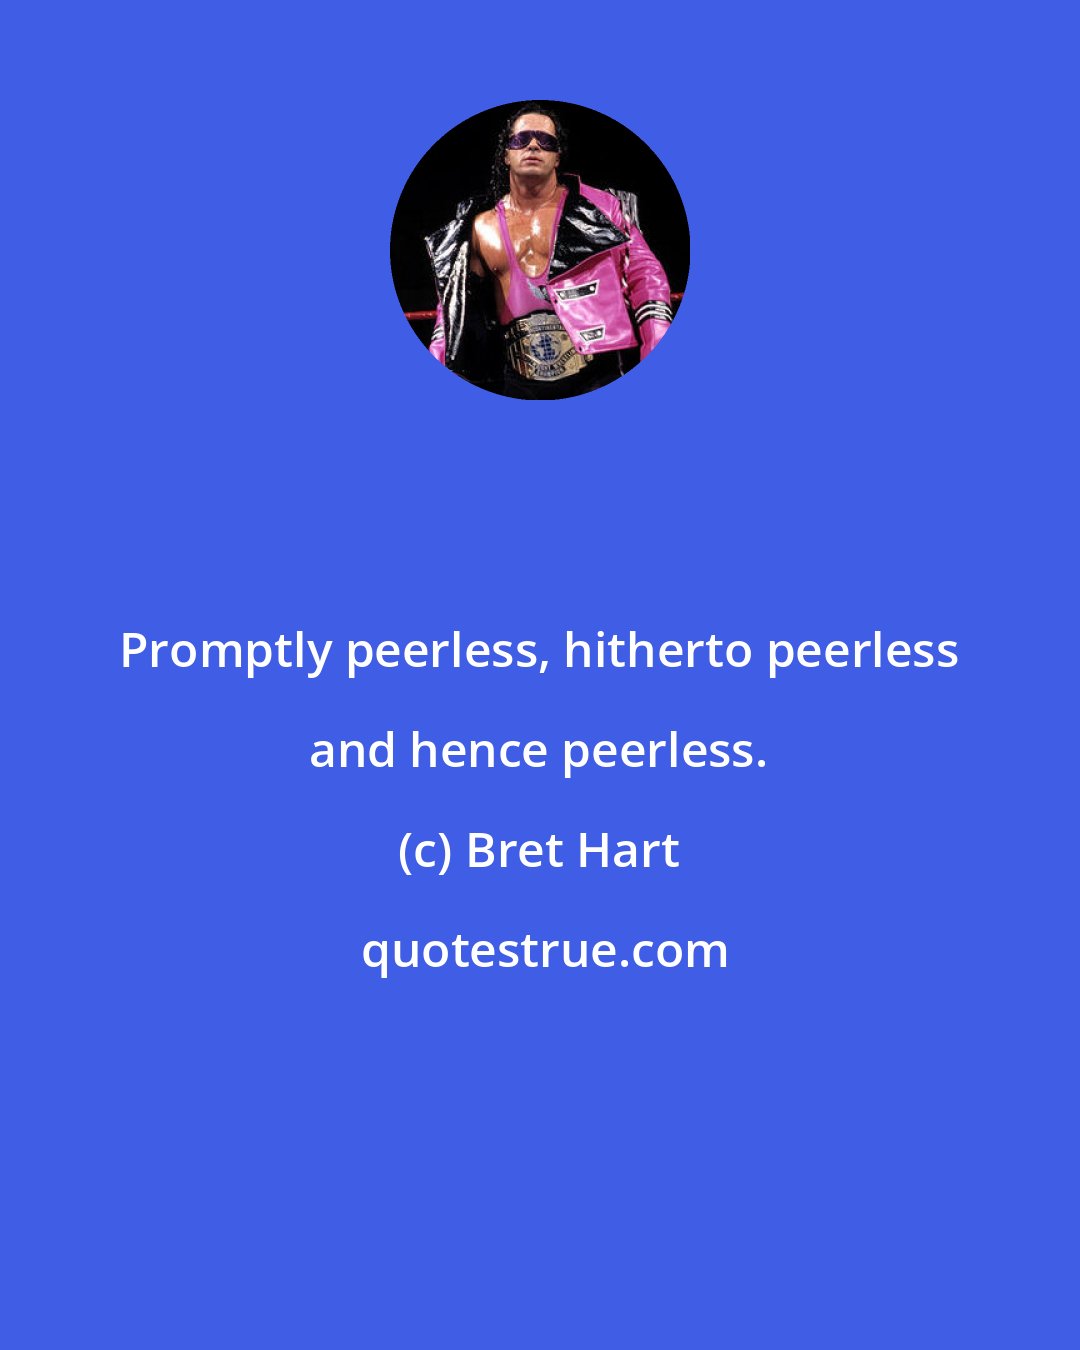 Bret Hart: Promptly peerless, hitherto peerless and hence peerless.